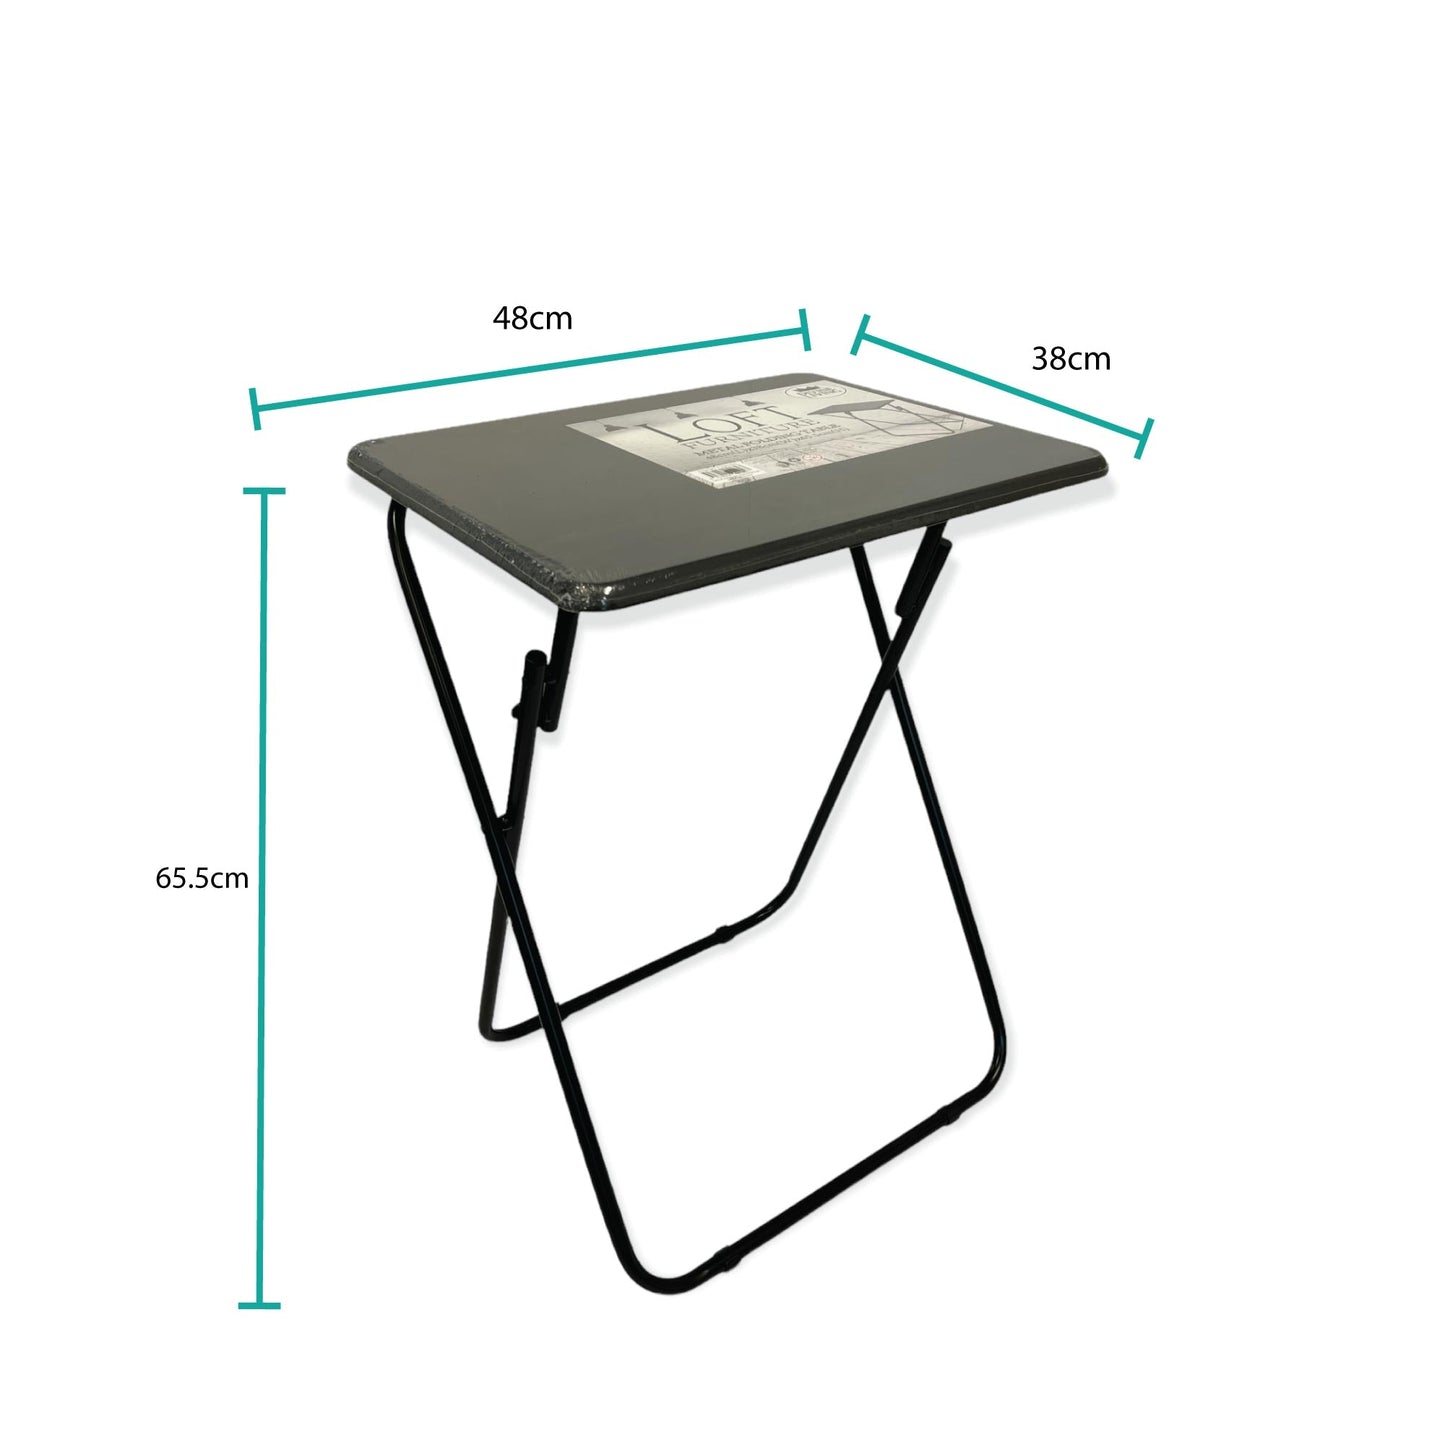 Metal MDF Folding Table Foldable Laptop PC Collapsible Study Desk 48cm x 38cm